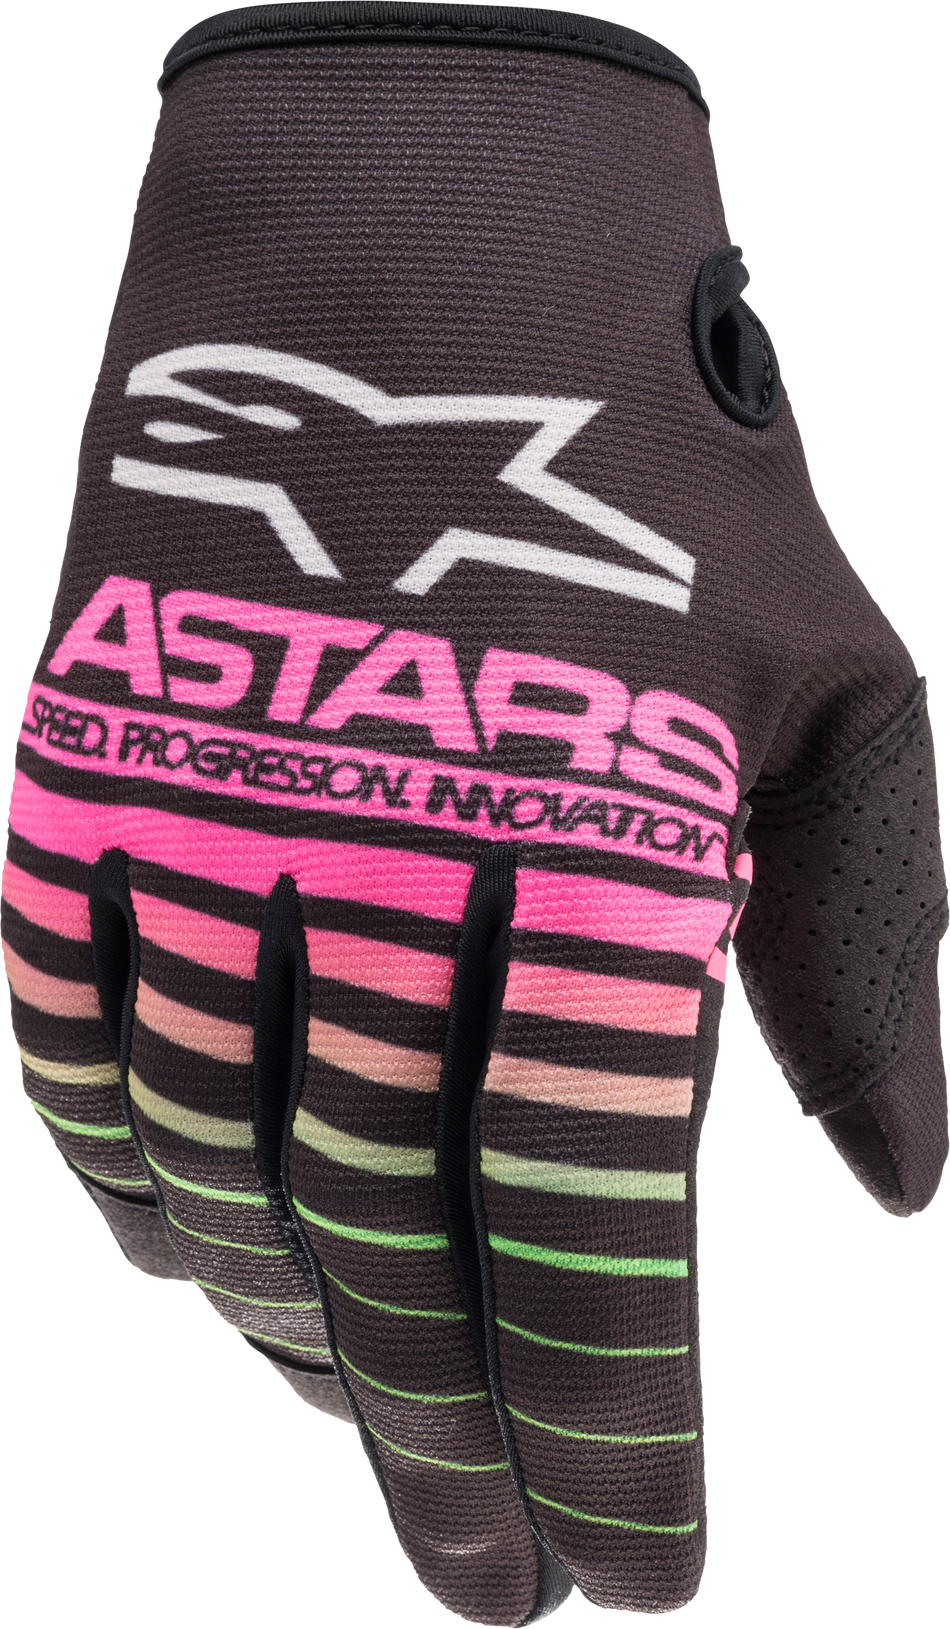 ALPINESTARS Youth Radar Gloves Black/Green Neon/Pink Fluo Lg 3541822-1669-L